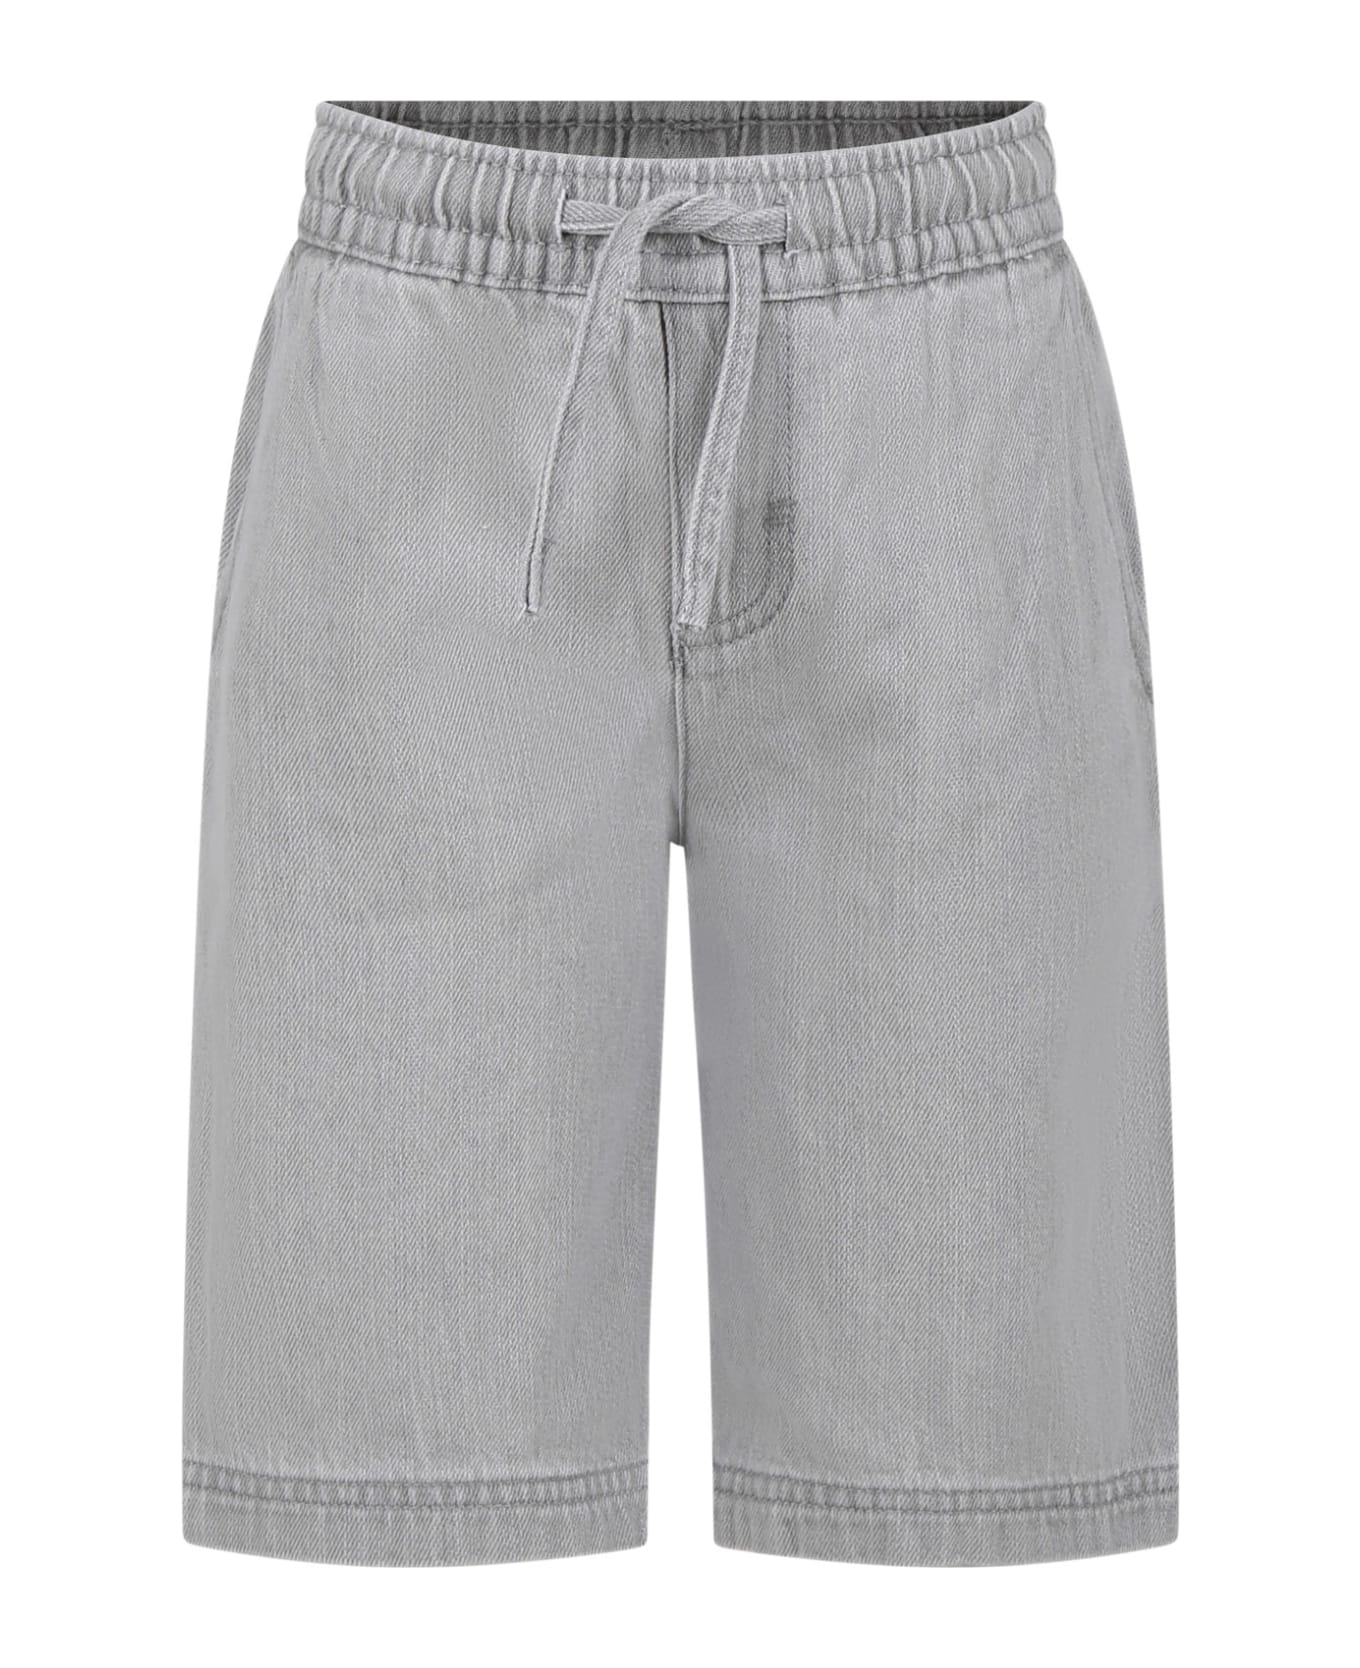 Stella McCartney Kids Gray Casual Shorts For Boy - Grey